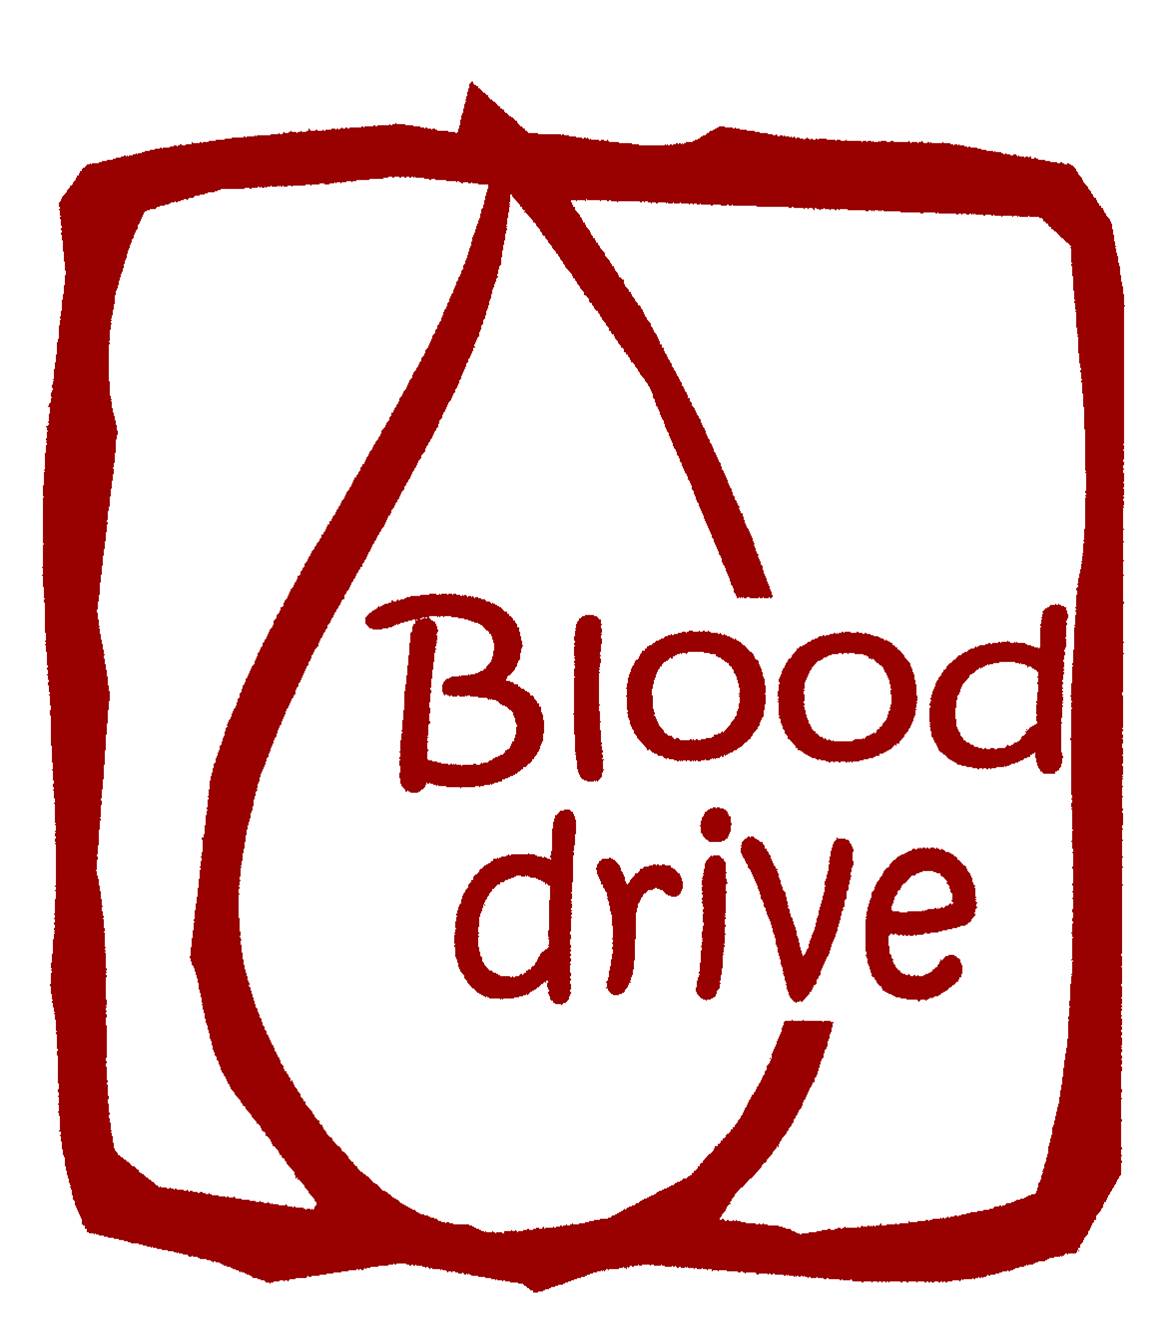 13 Blood Drive Clip Art Free 